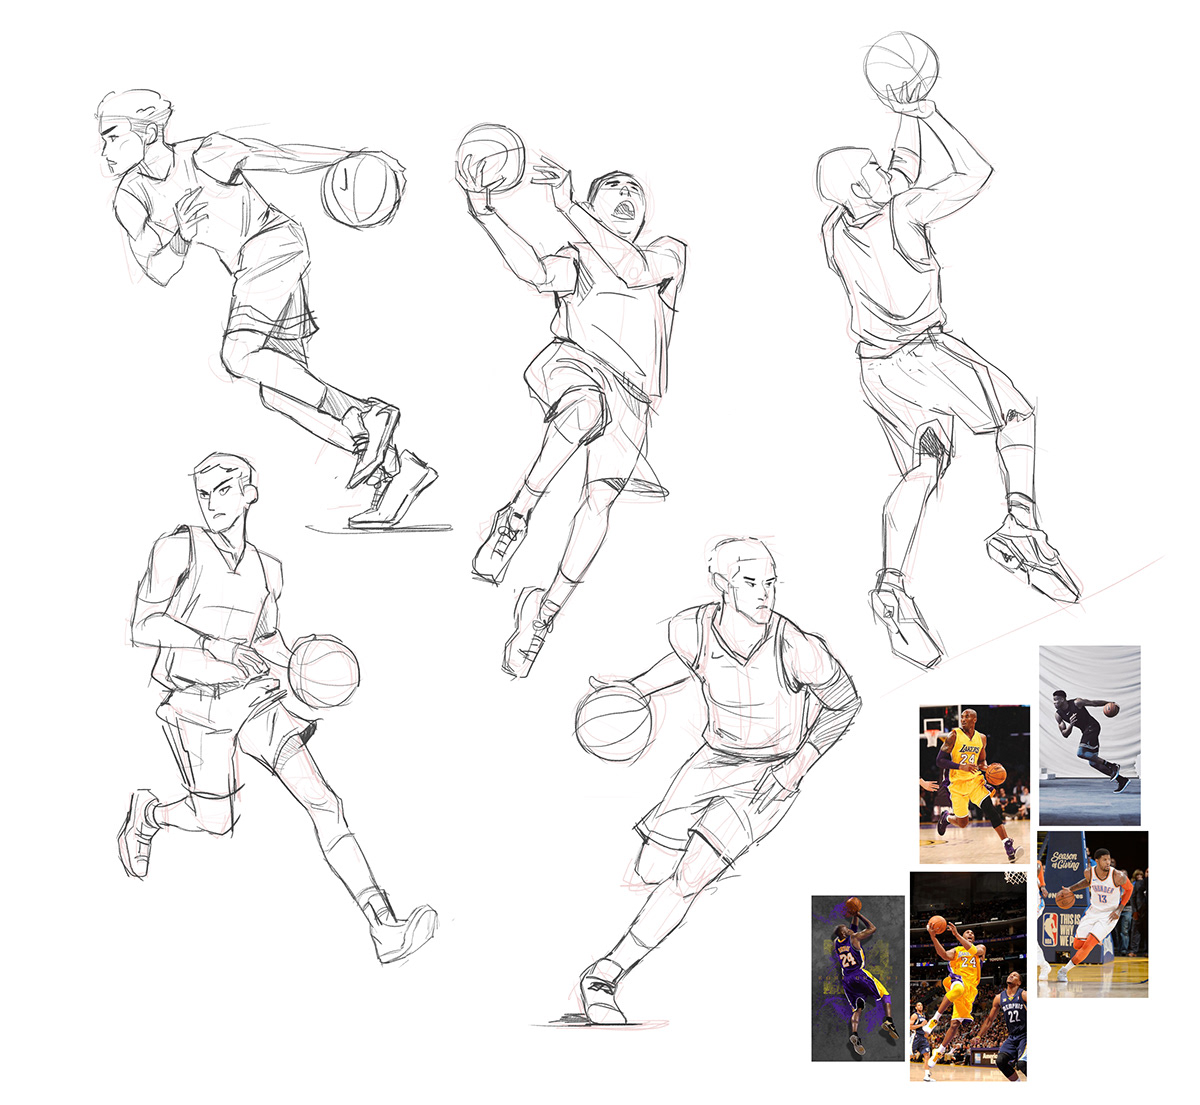 painting   Drawing  Digital Art  ILLUSTRATION  artwork digital illustration cartoon basketball gesture sketch